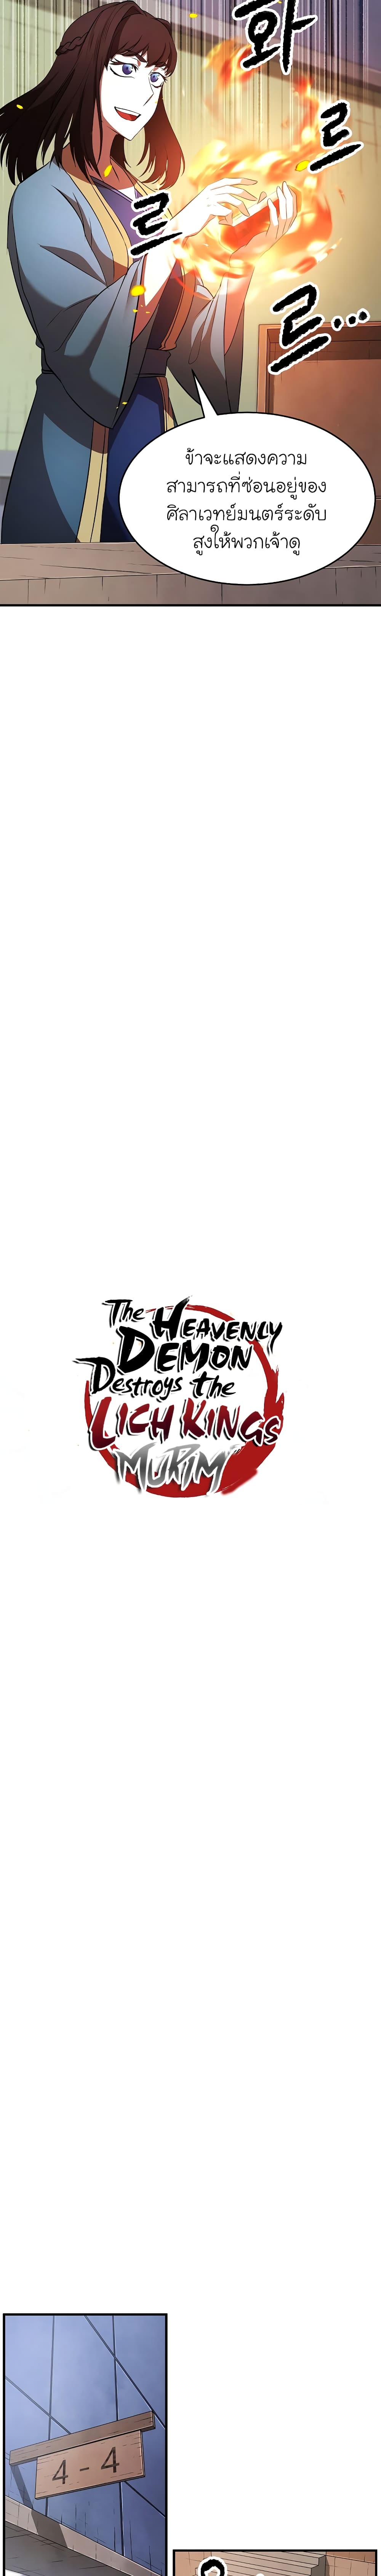 The Heavenly Demon Destroys the Lich Kingâ€™s Murim 35 11